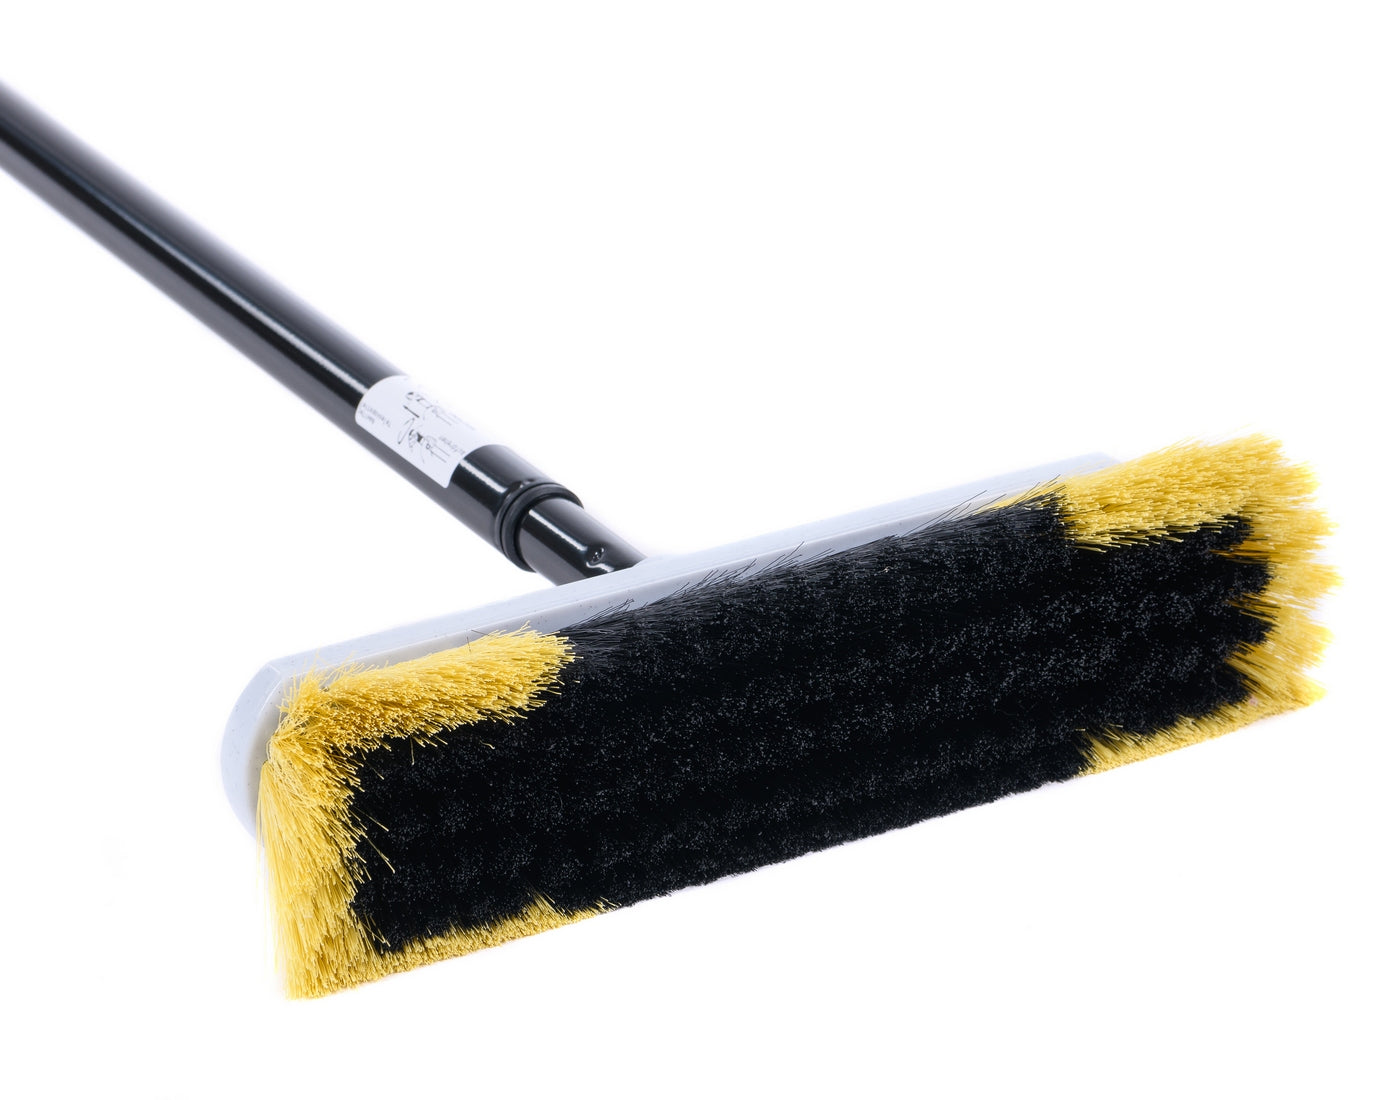 Plastic room broom with telescopic handle